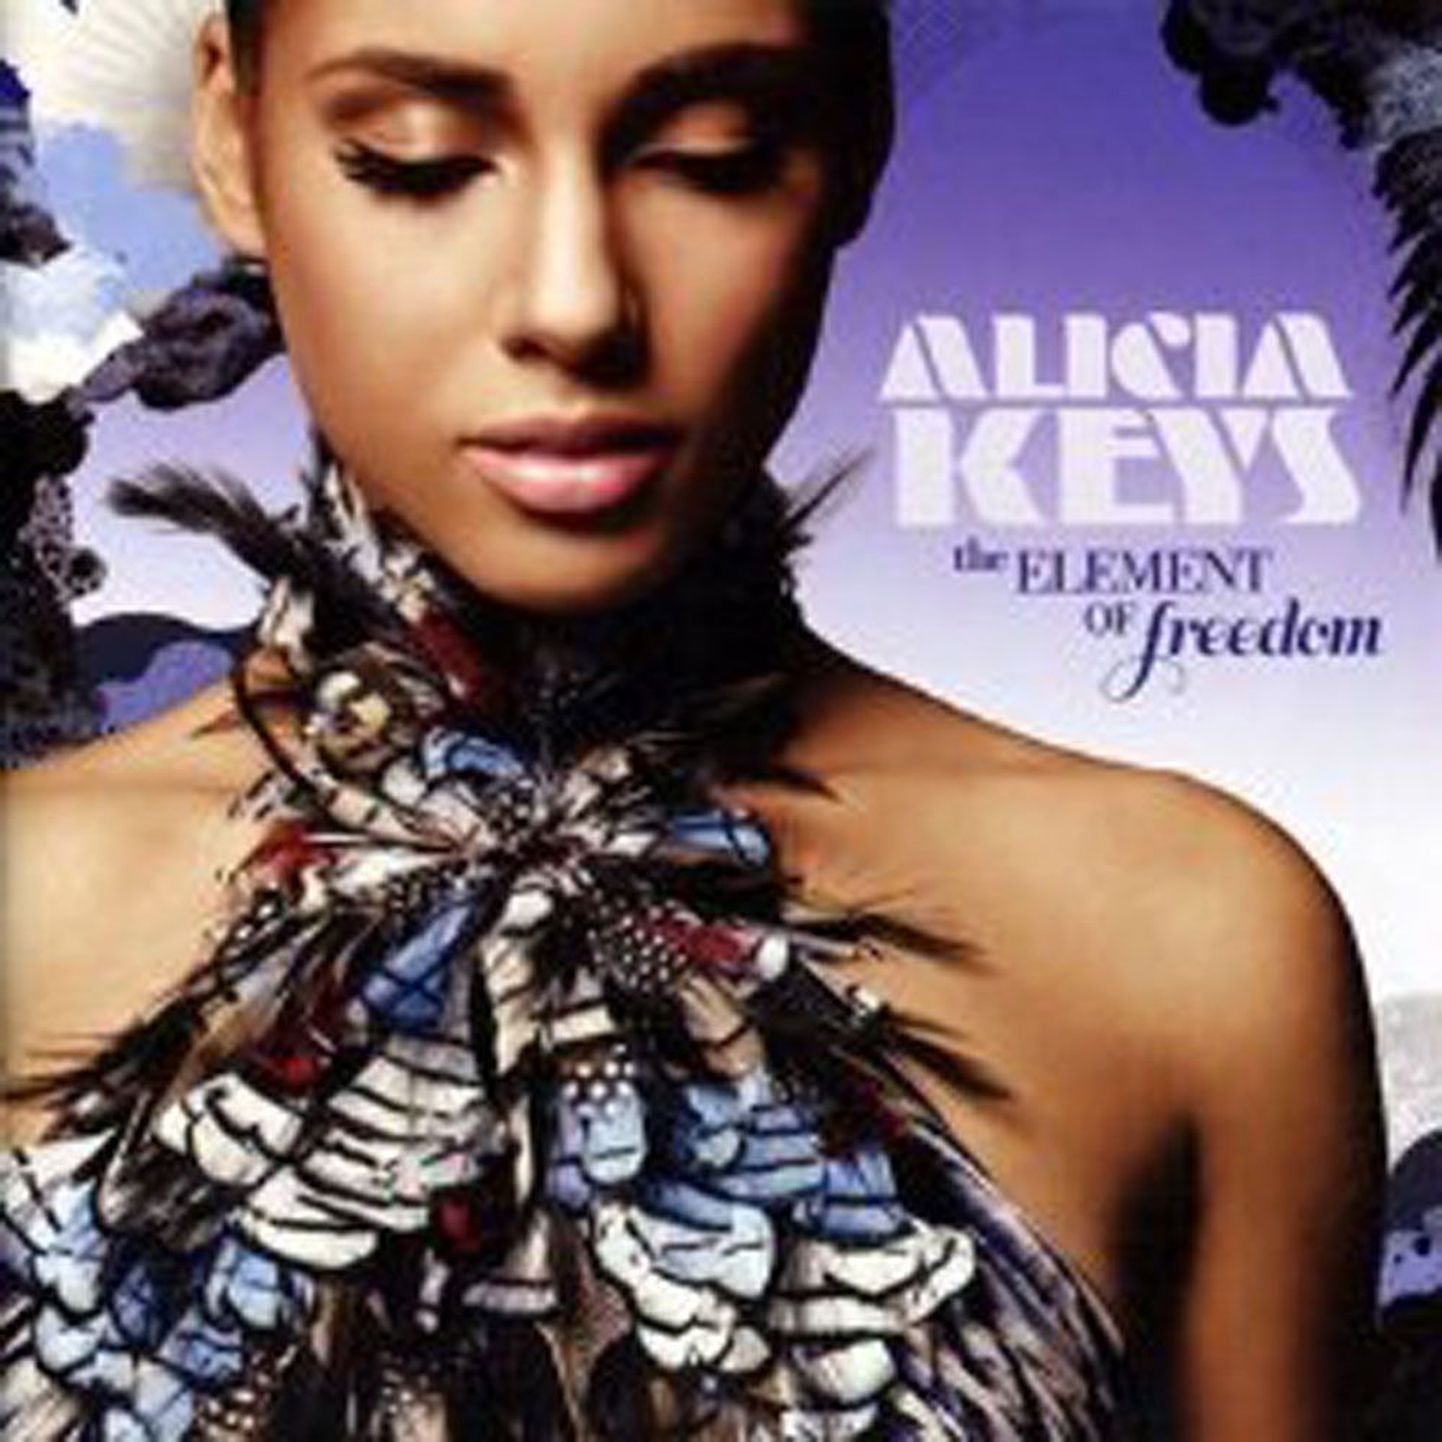 Alicia Keys
The Element Of Freedom (j)